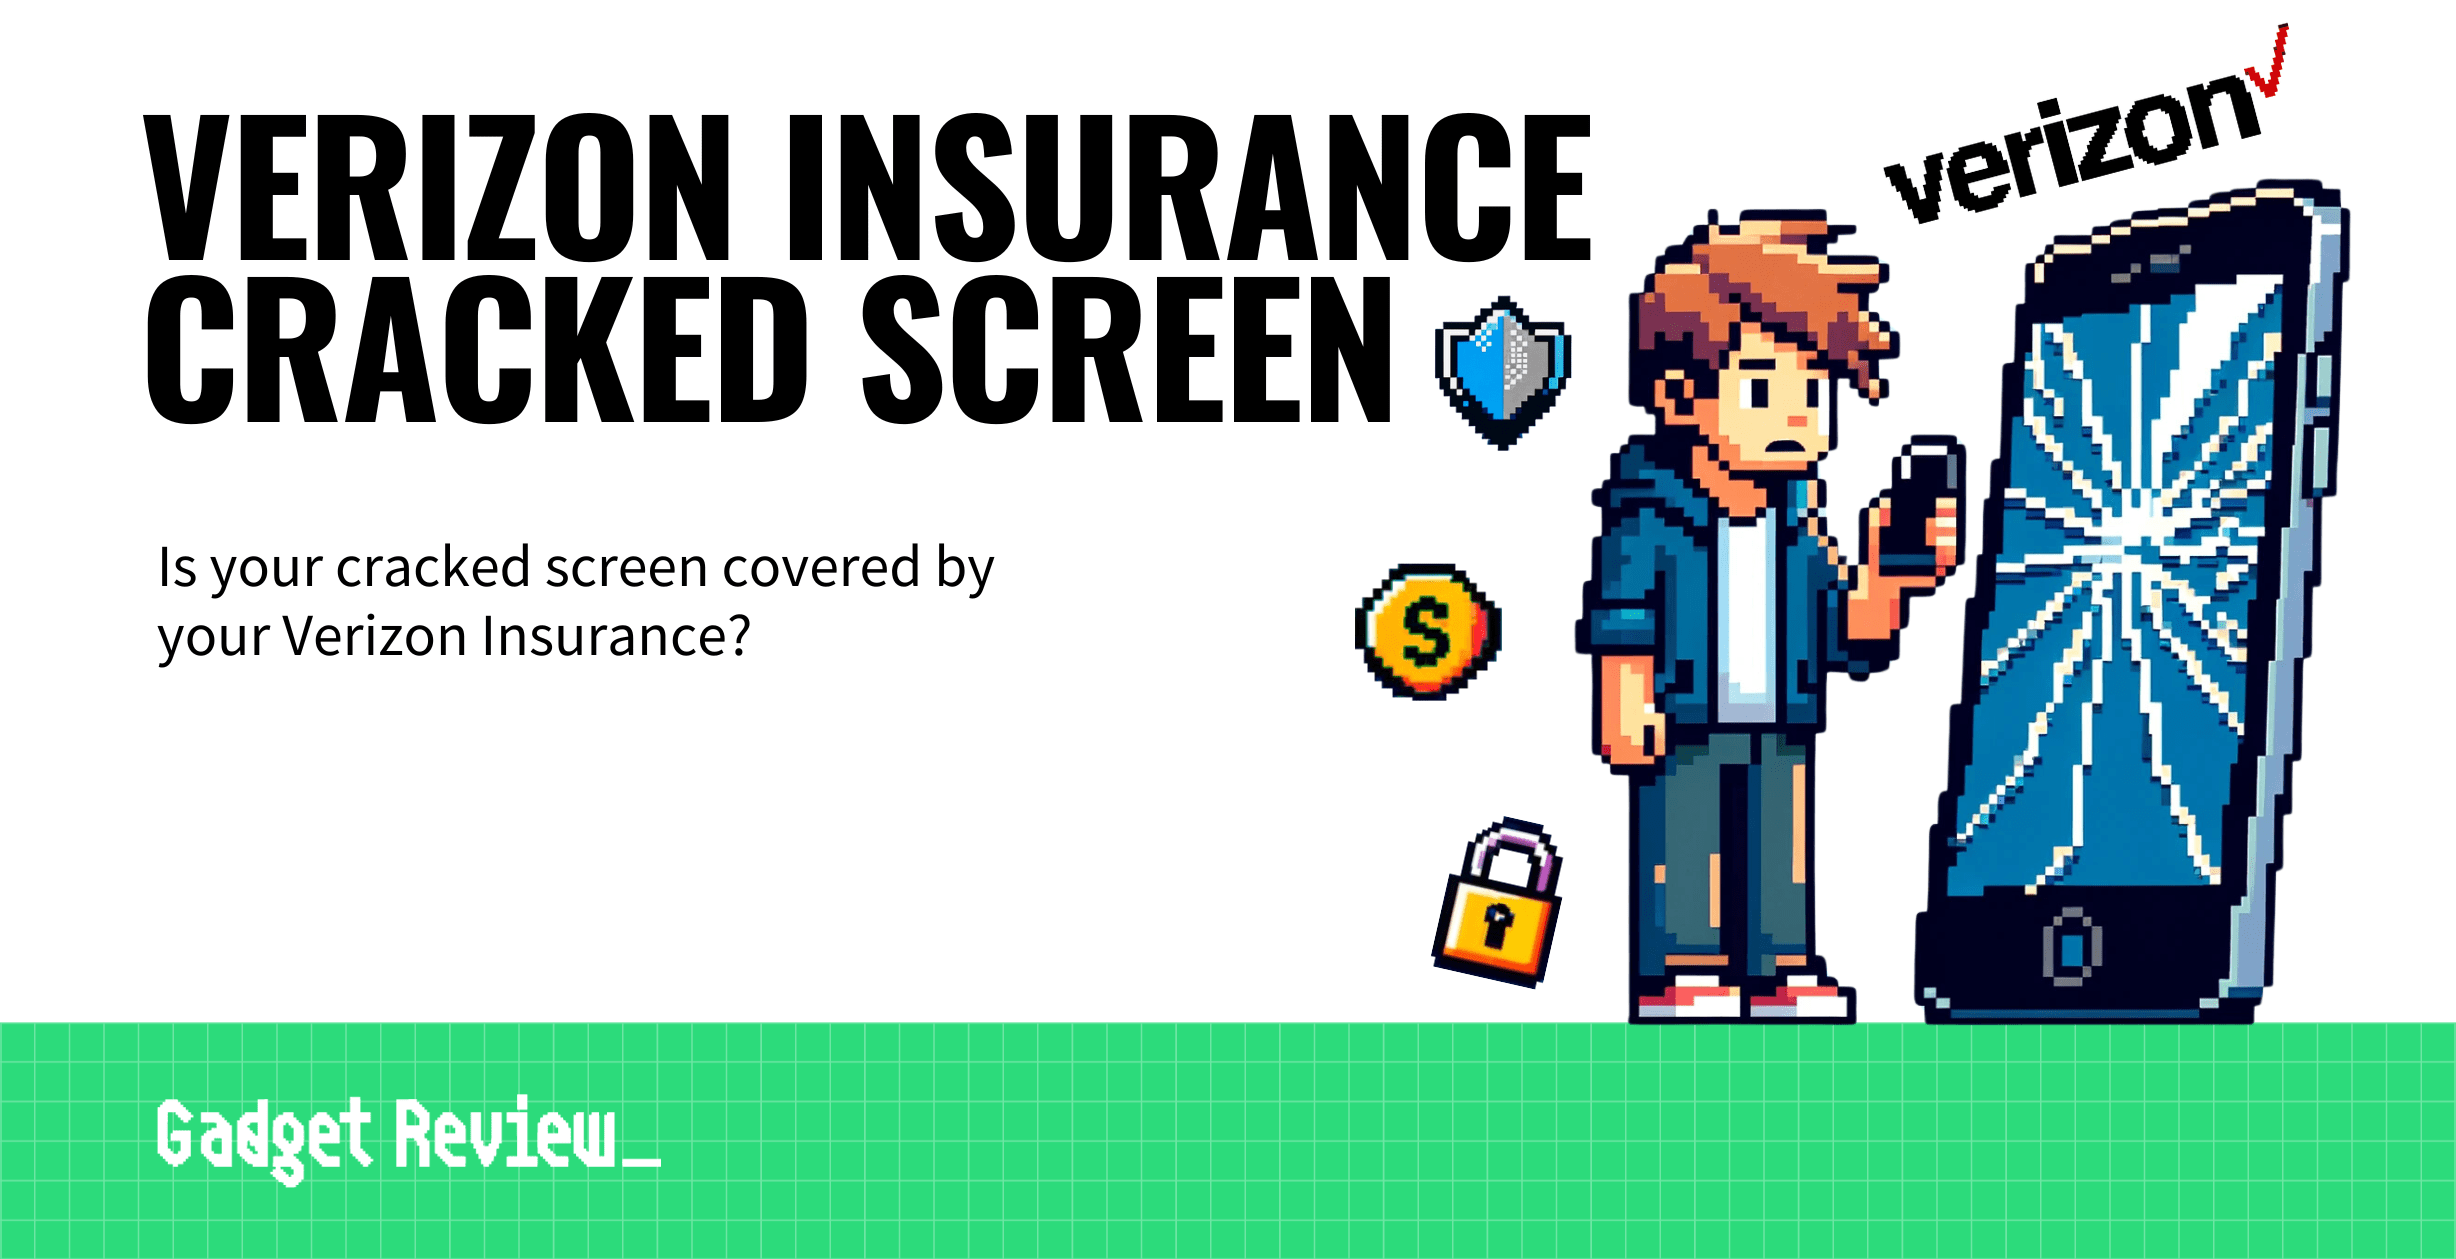 verizon insurance cracked screen guide